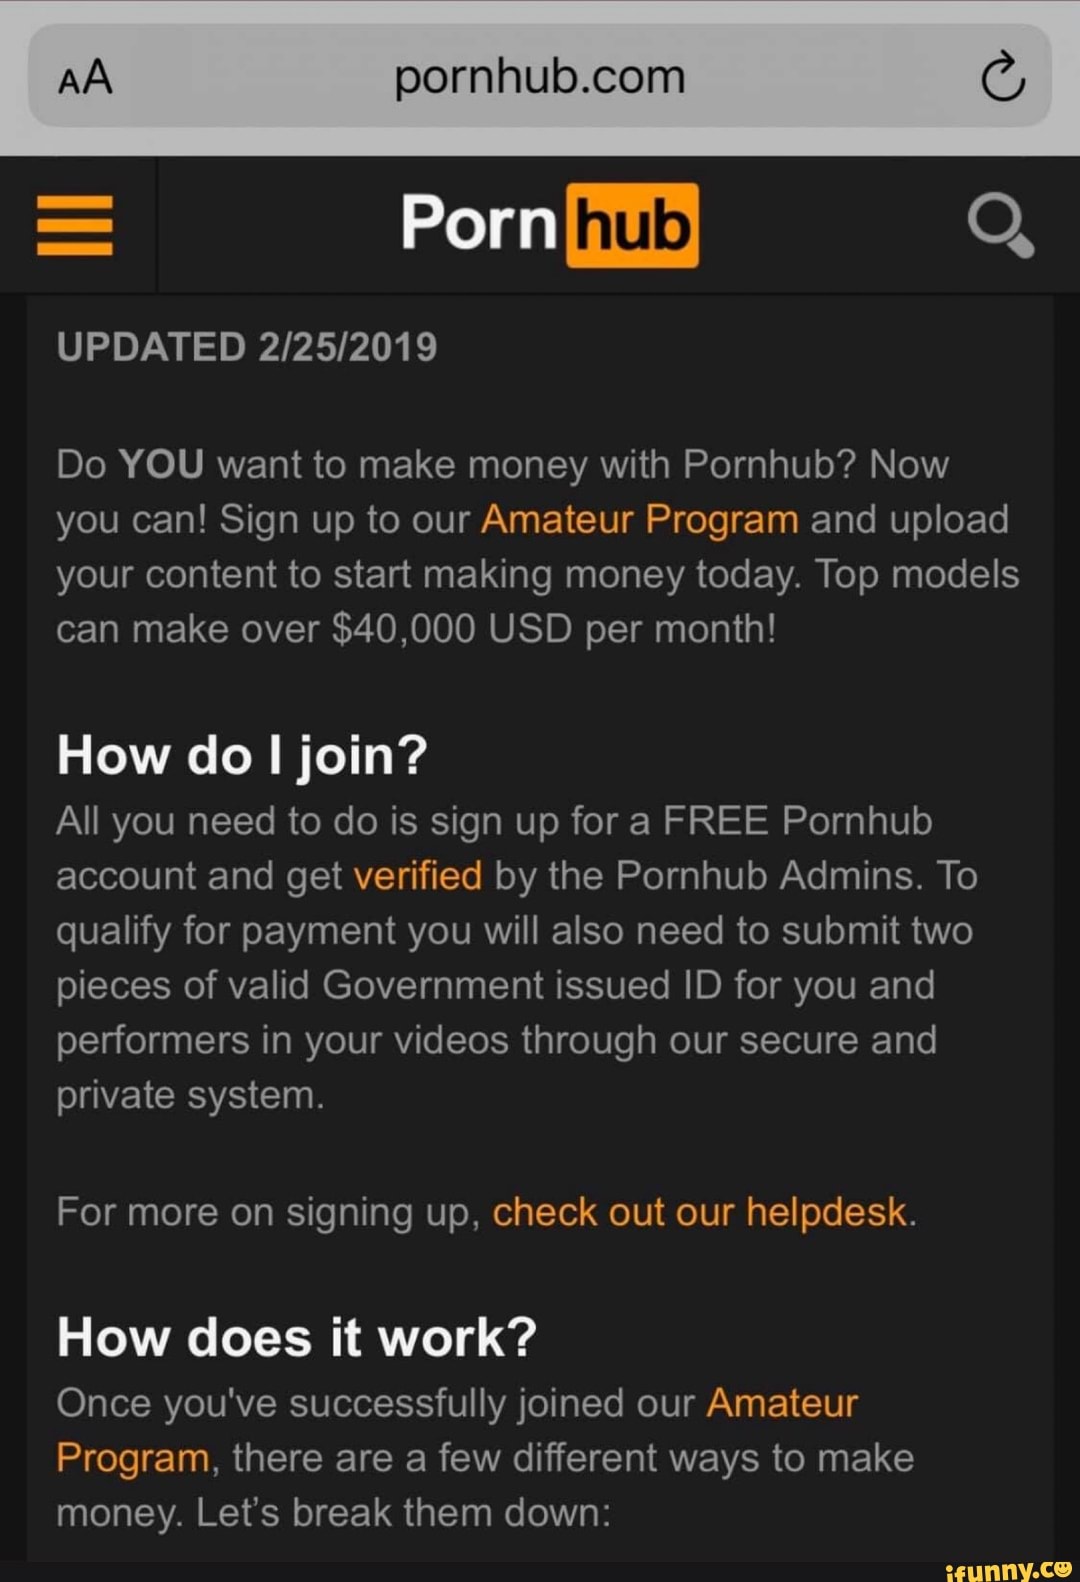 charles blum share pornhub model payment program photos